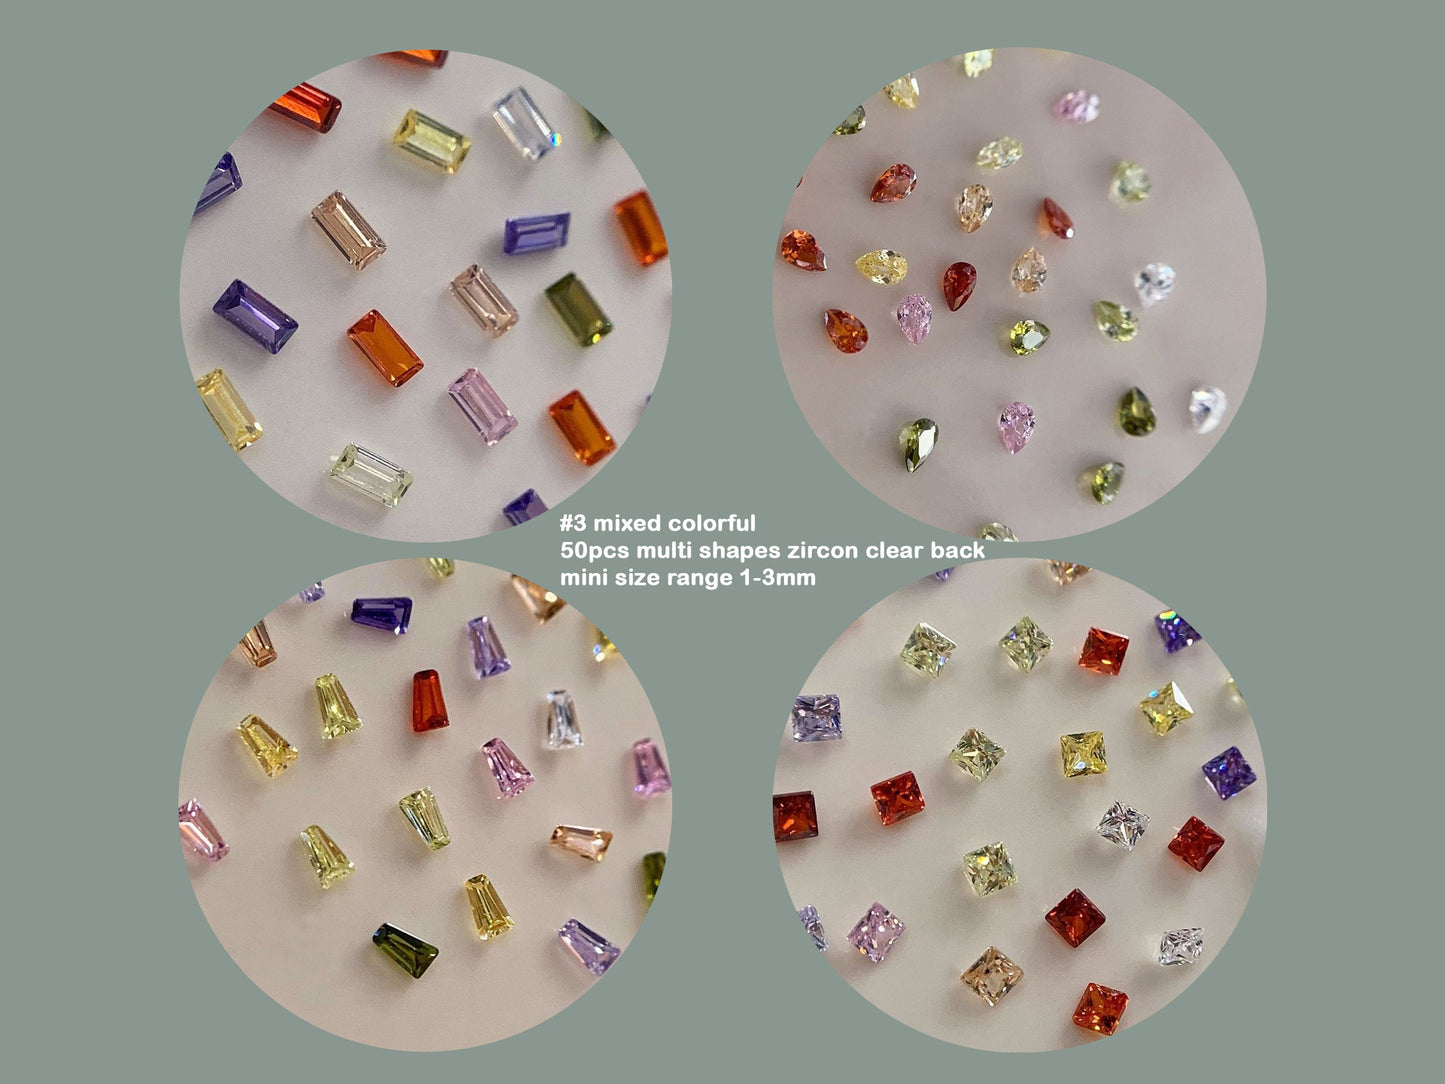 50pcs Mini Zircon Gemstones Nail Decal/ Blingbling Clear& Colorful Zircons Nails Jewelry Ornaments/ Versatile Elegant Manicure Studs